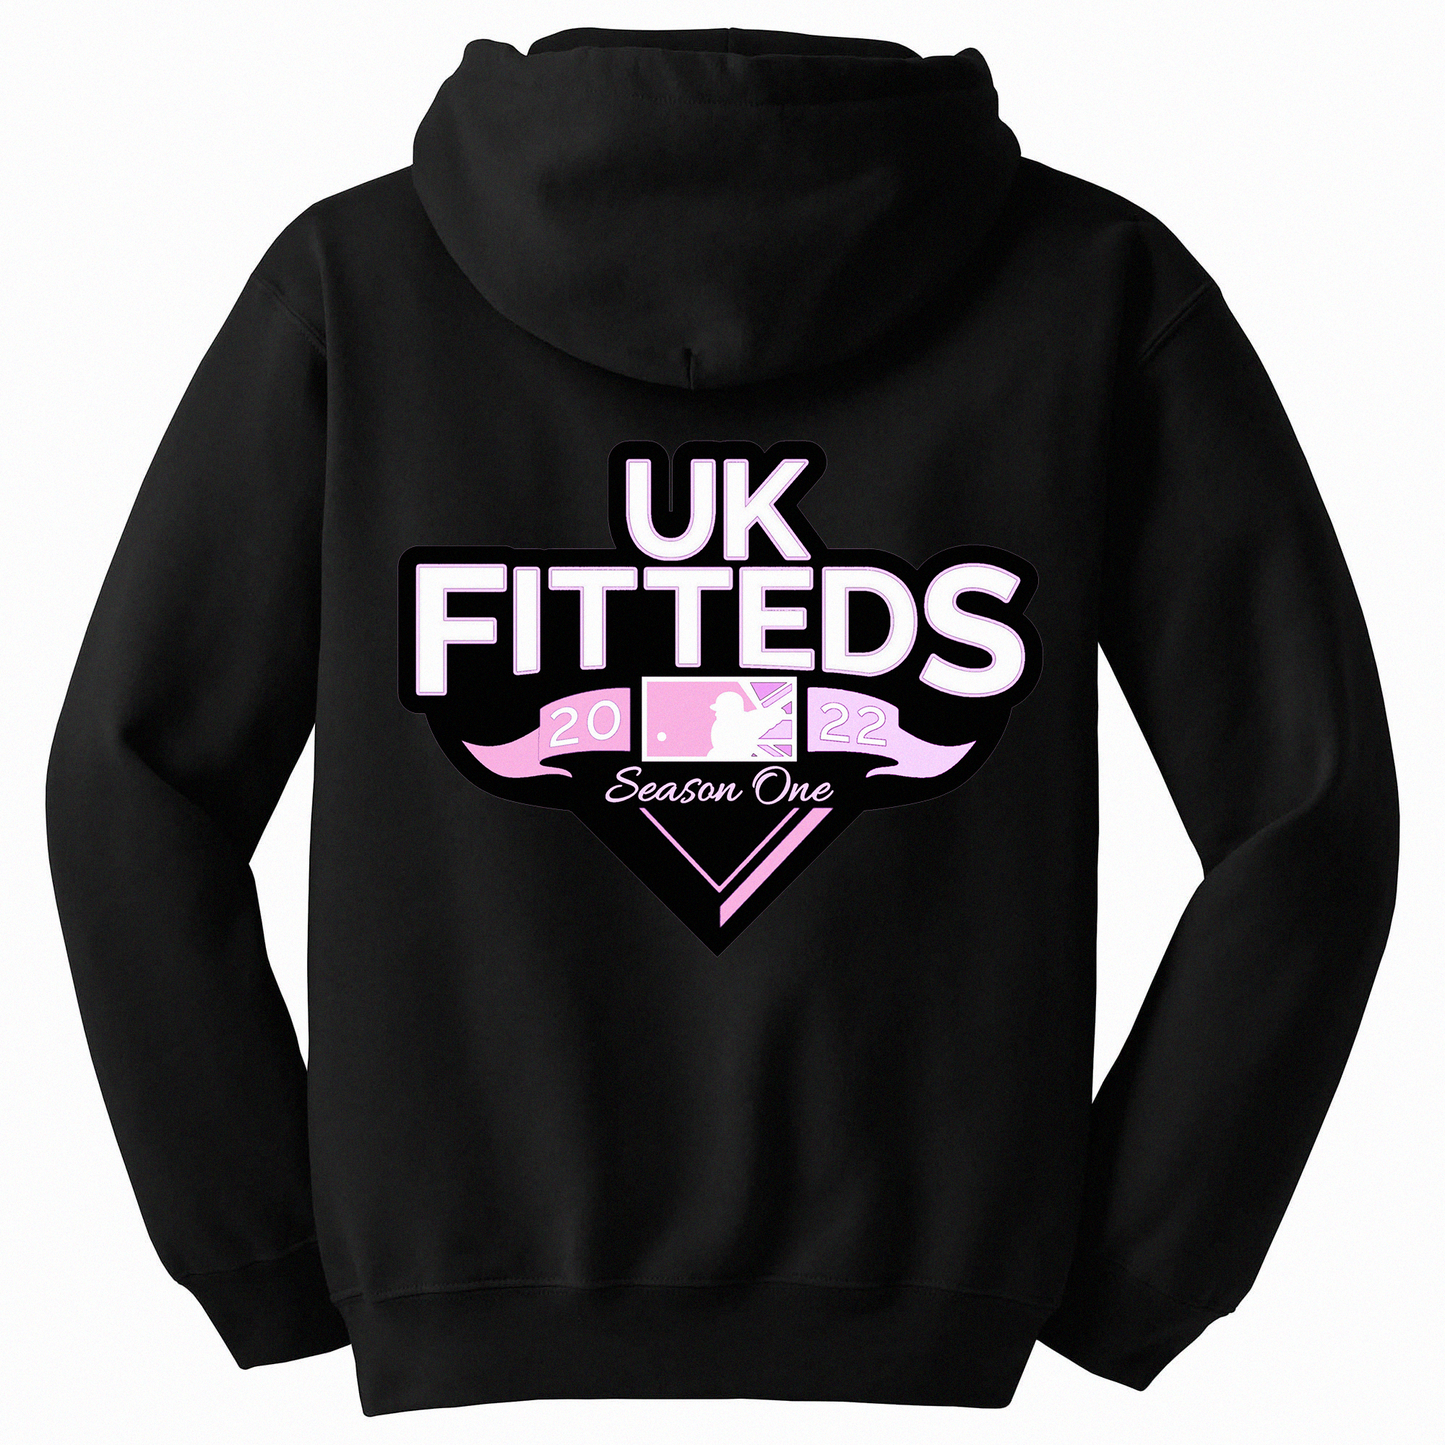 UKFitteds S1 Track Hoodie Black/Pink Colourway